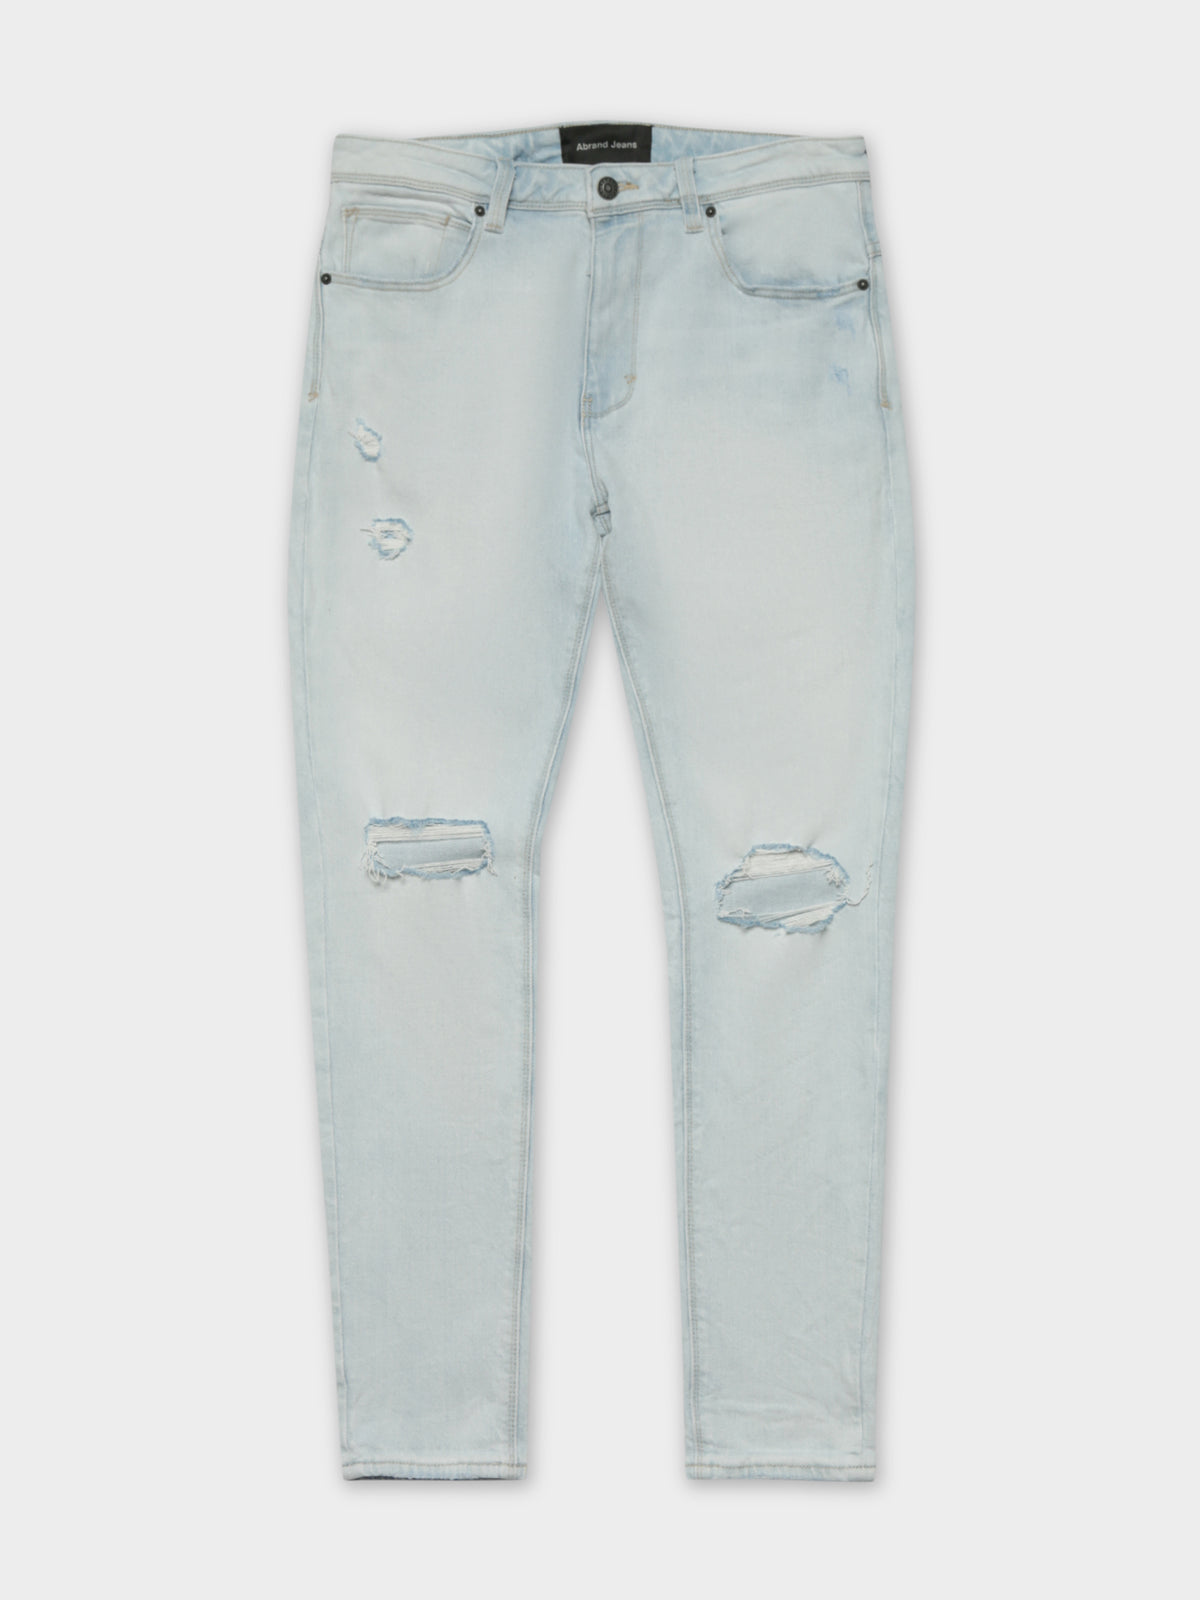 A Dropped Skinny Turn Up Jeans in Street Soul Repair Blue